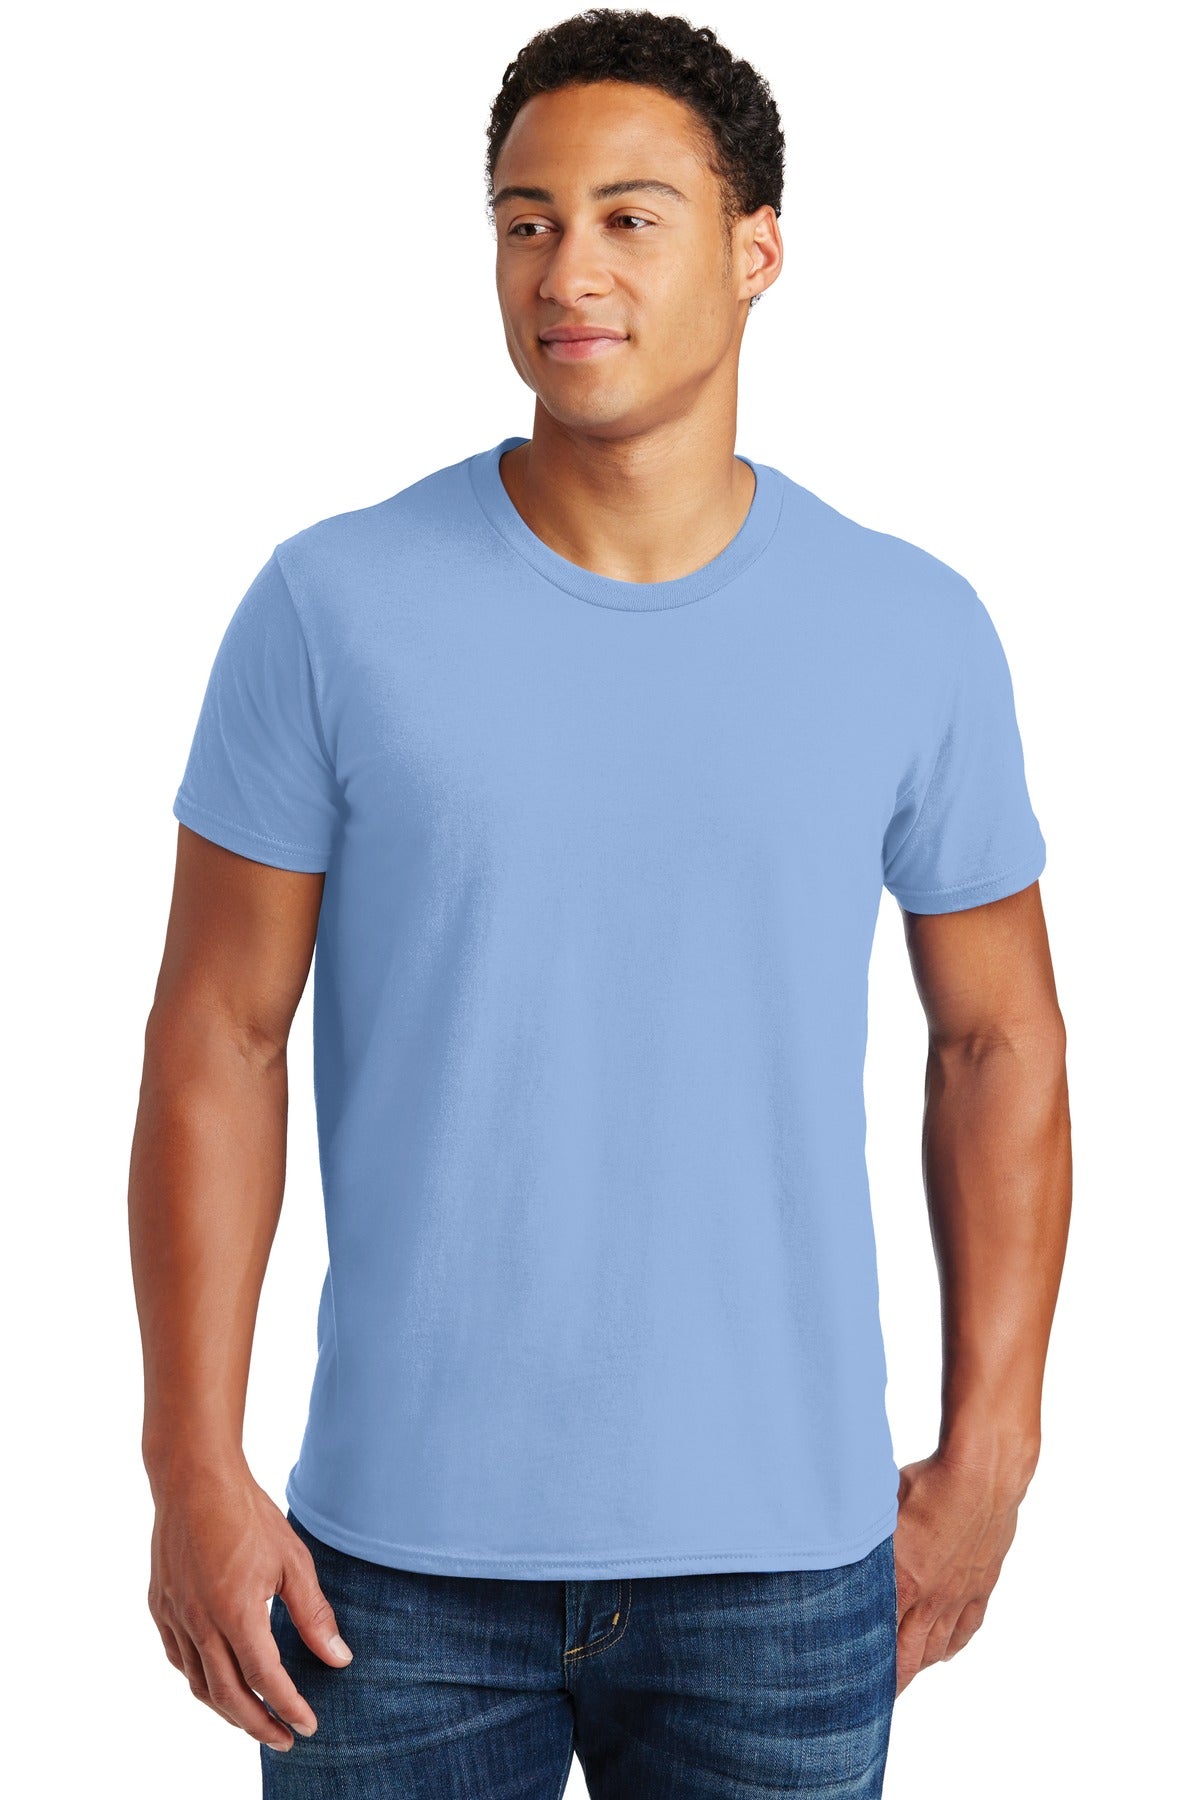 Hanes - Perfect-T Cotton T-Shirt. 4980